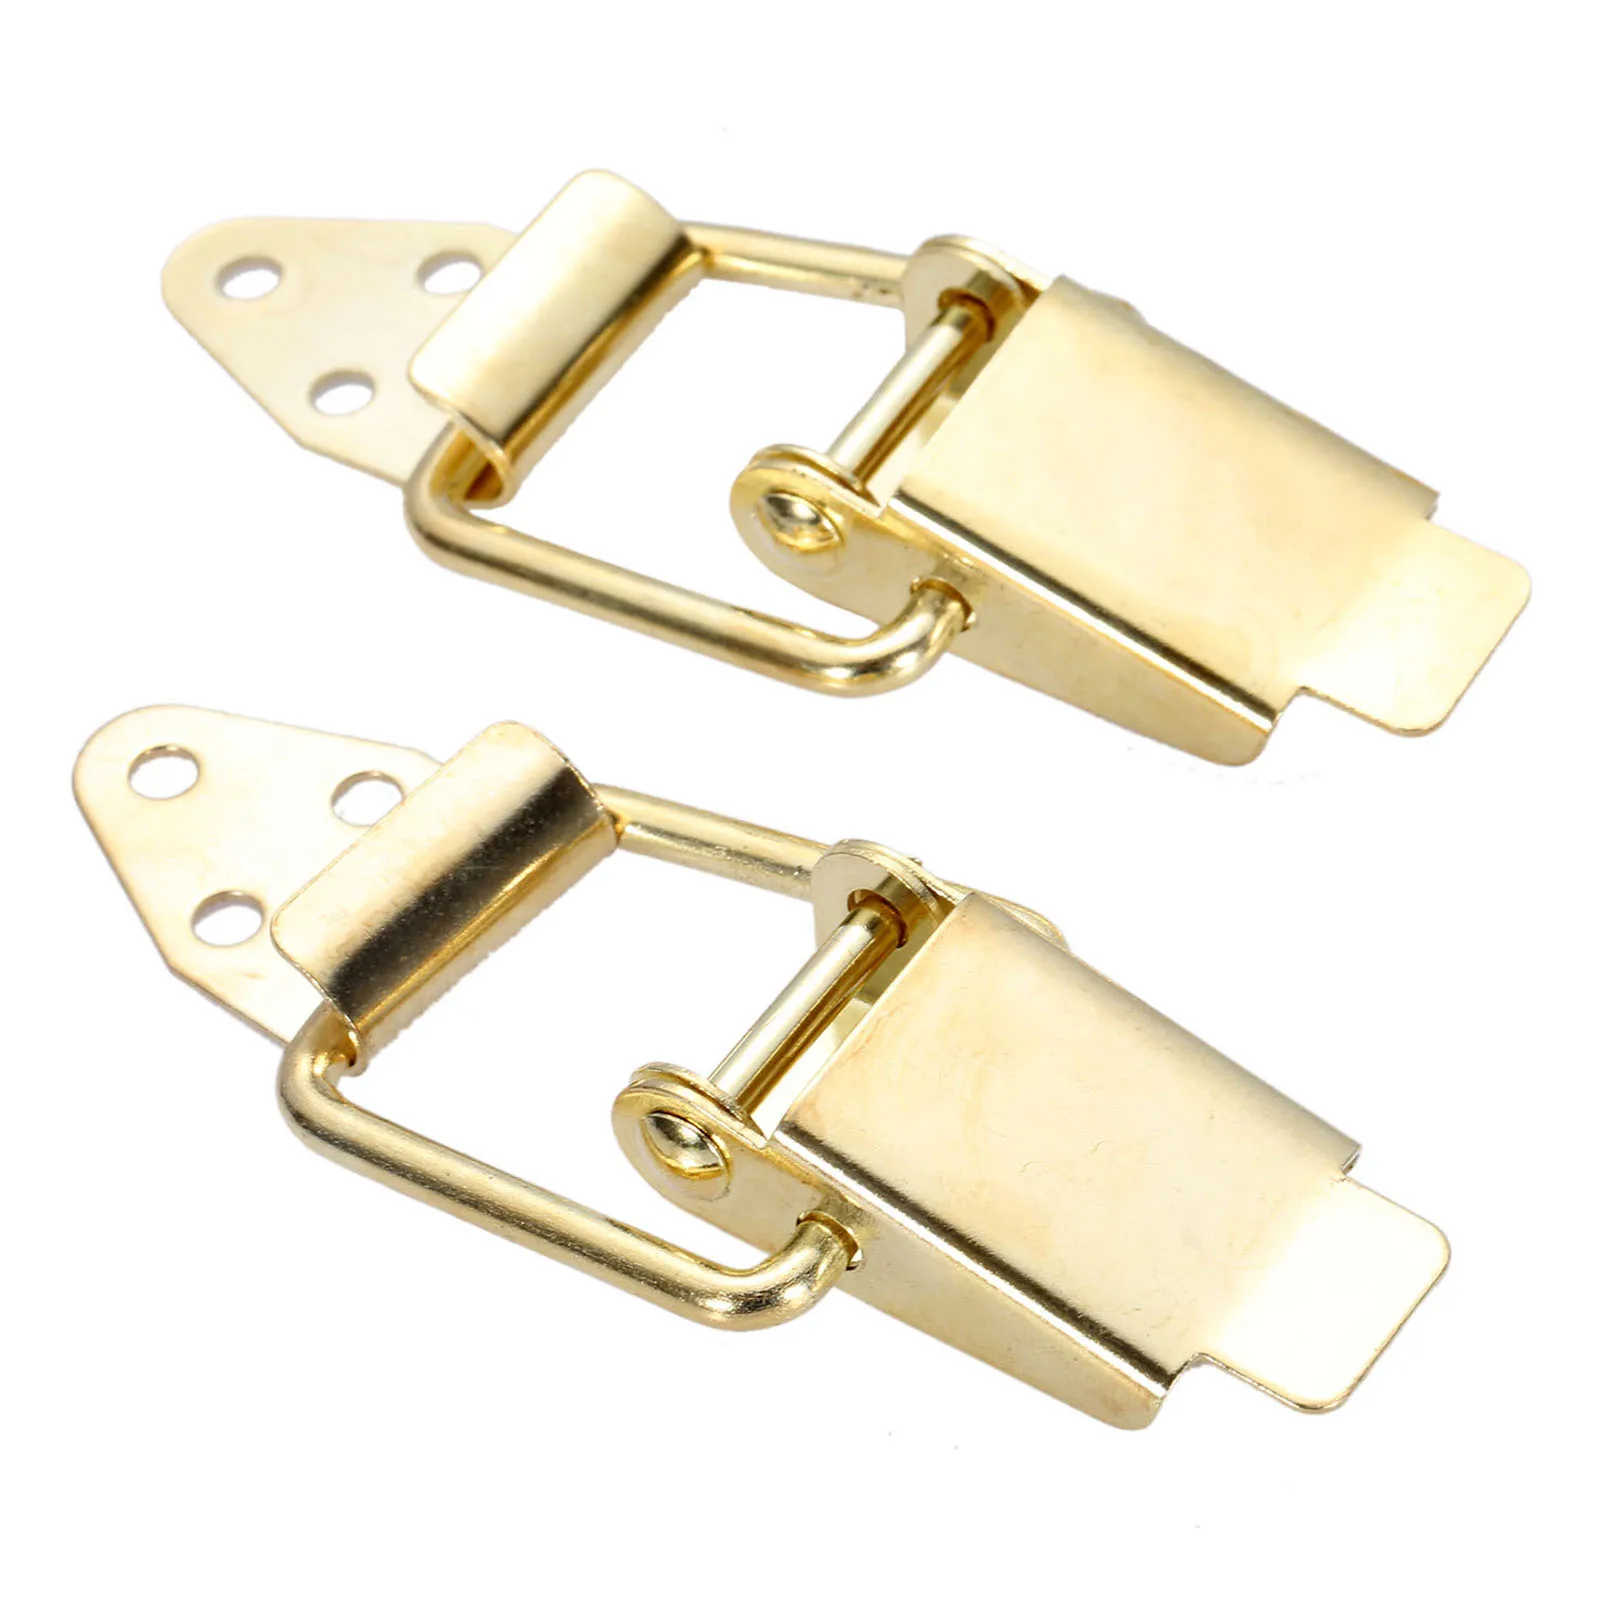 

10Pcs Golden Zinc Alloy Hasps Lock 80*18mm Wooden Box Iron Suitcase Buckles Toggle Hasps Latch Catch Clasps